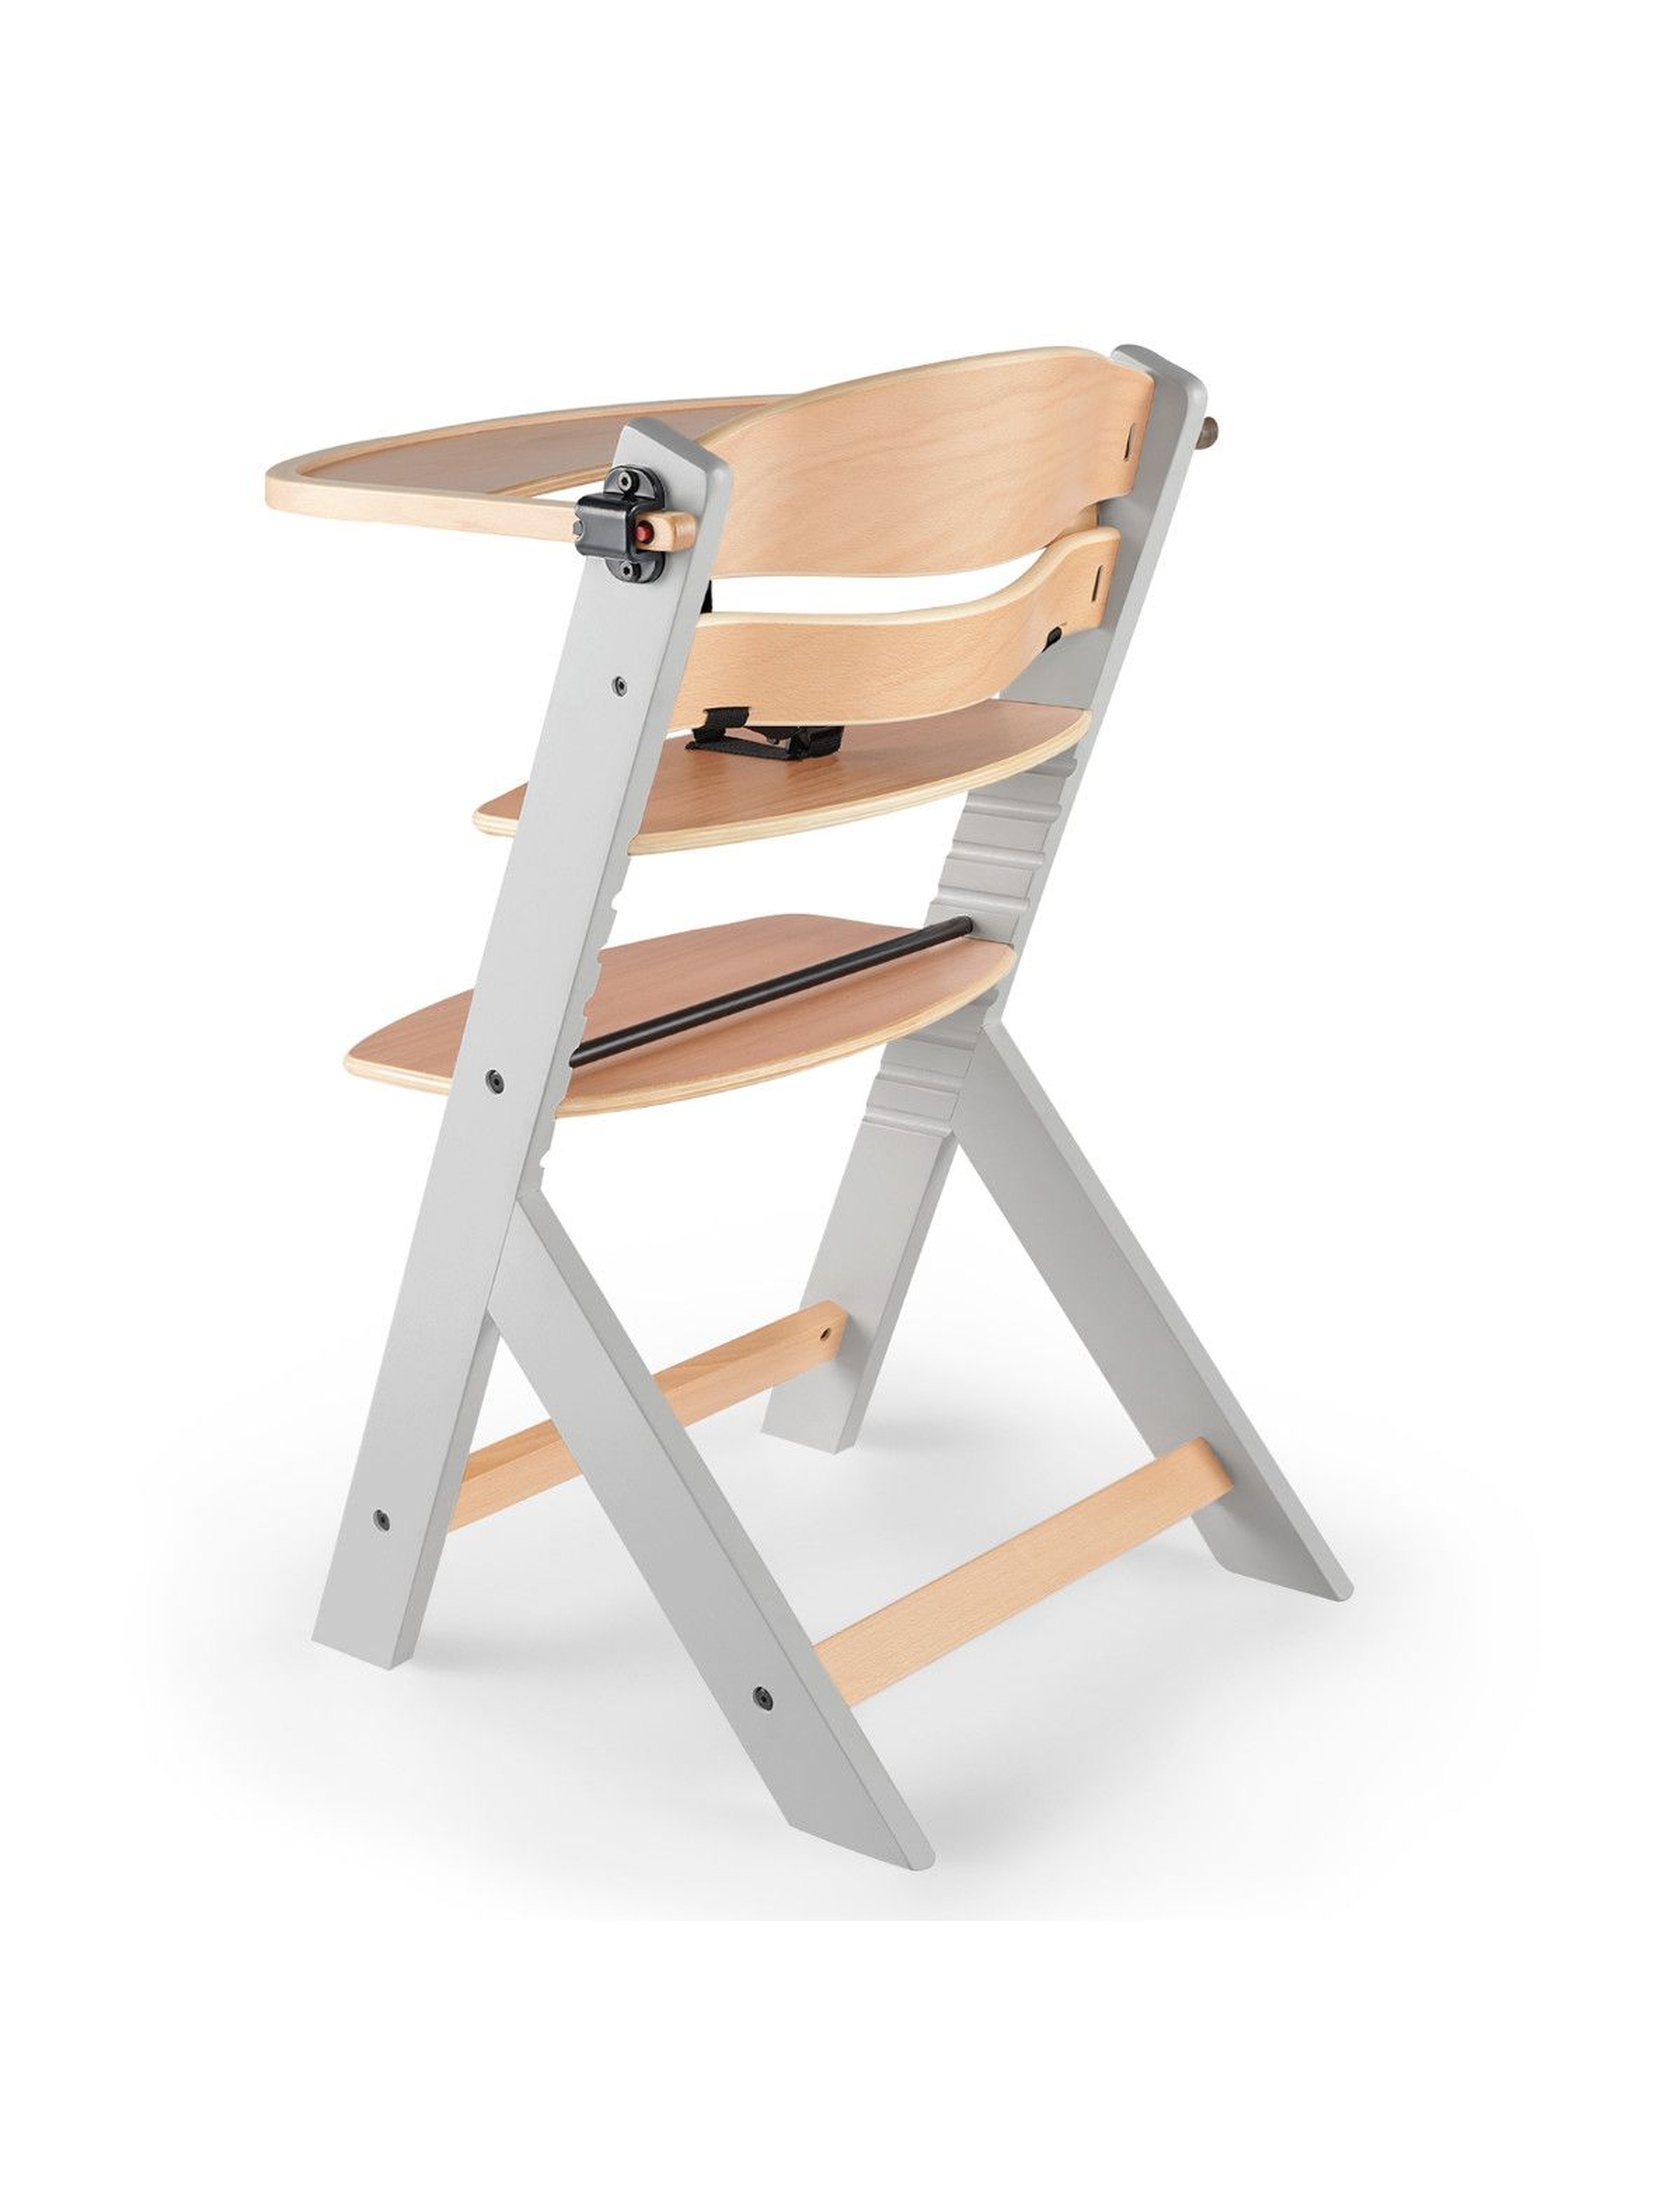 Krzesełko do karmienia ENOCK drewniane szare nogi Kinderkraft